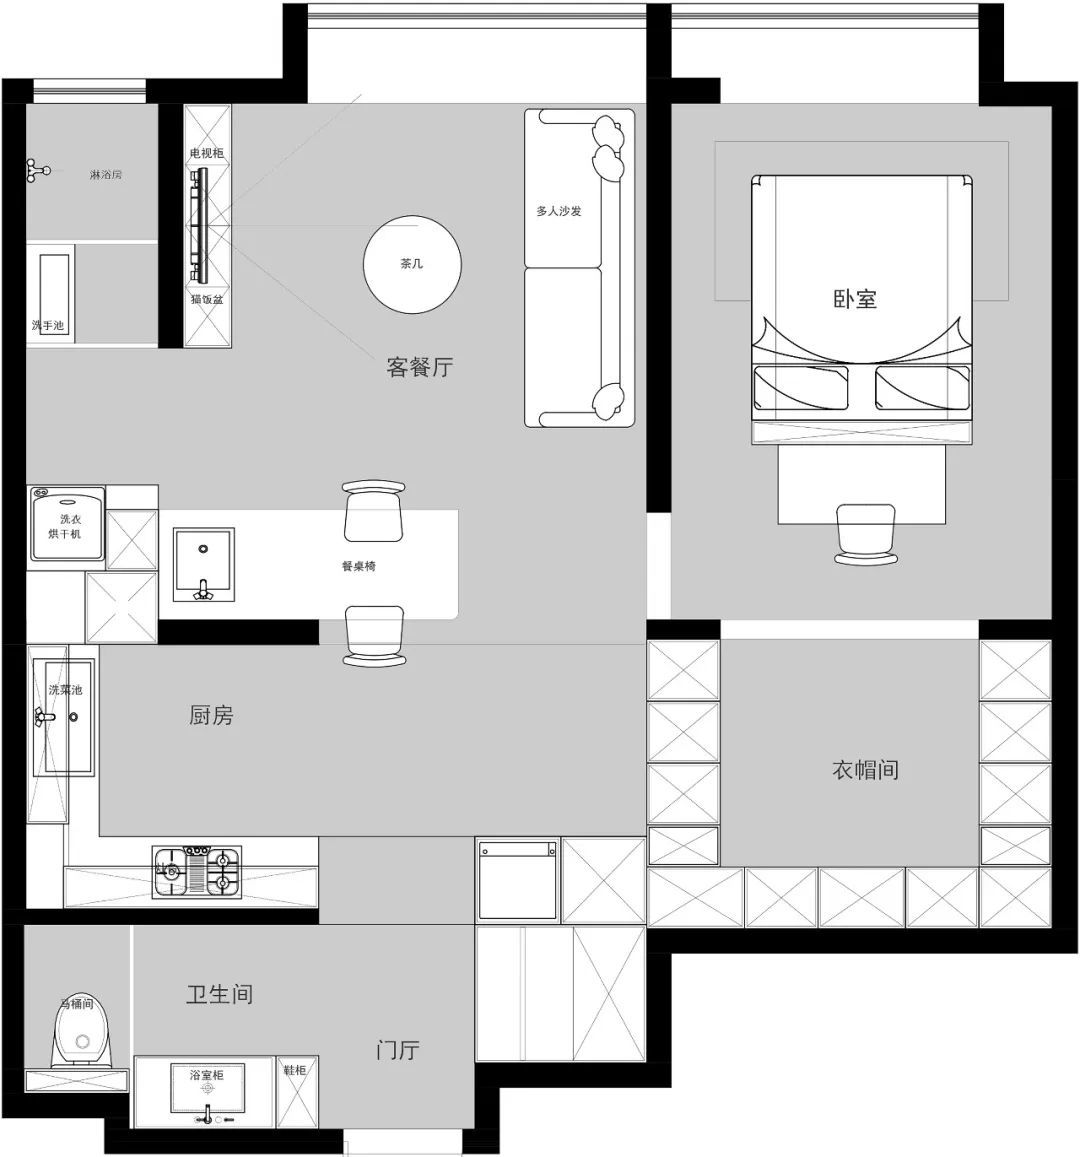 66 m²帝都精英男一人居，不要次卧装俩厨房，整屋智能太上头！